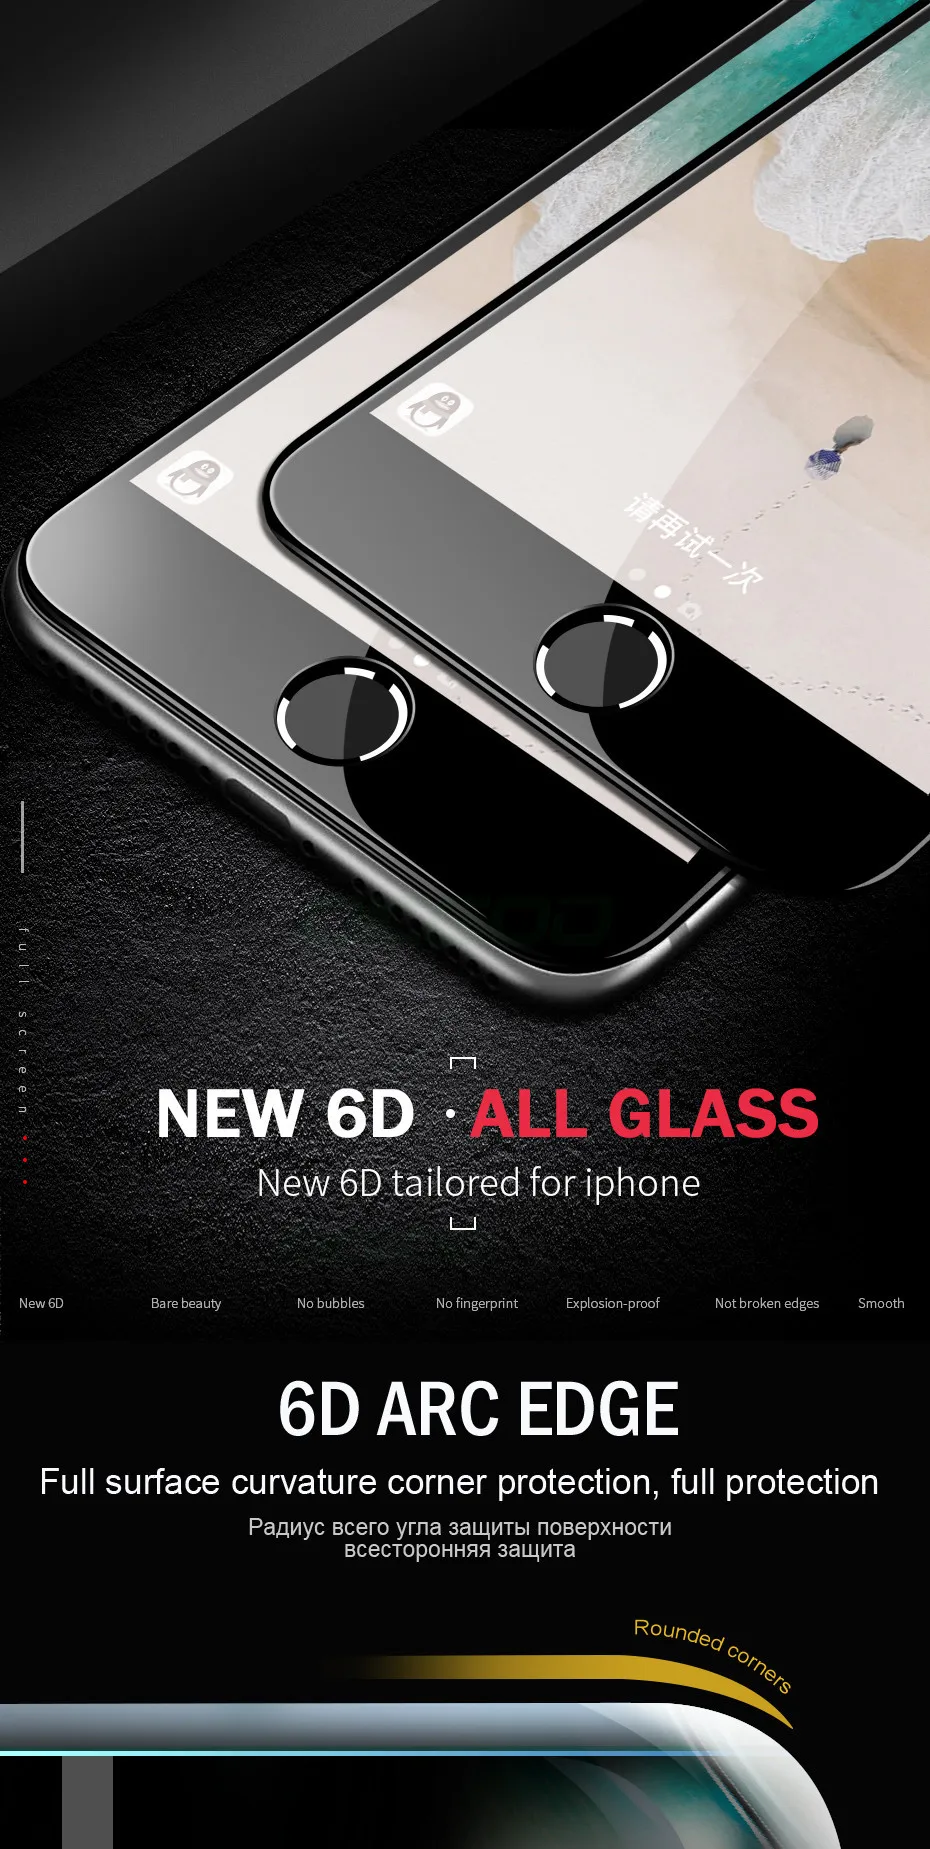 Best Real 3D 4D изогнутые полное покрытие экран протектор 9 H 5D 6D закаленное стекло для iPhone 6 6 S 7 8 Plus X Xs Max XR против отпечатков пальцев